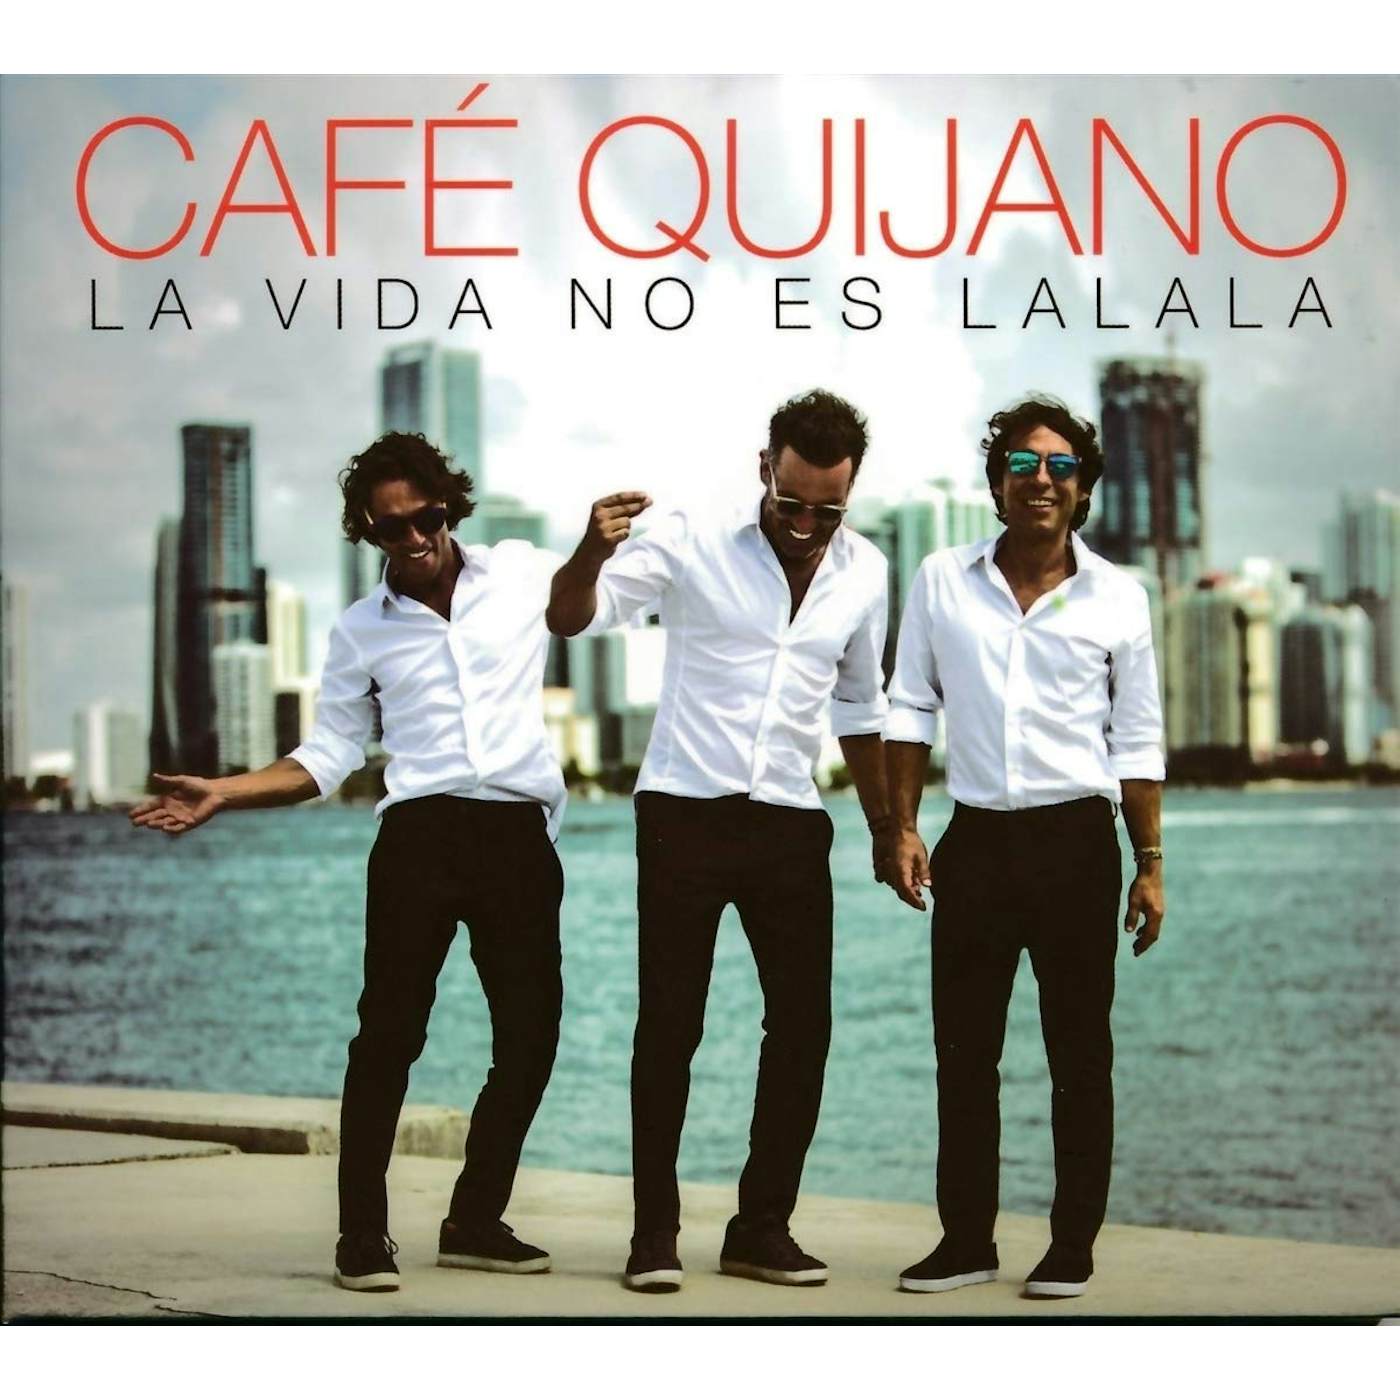 Café Quijano LA VIDA NO ES LA LA LA CD